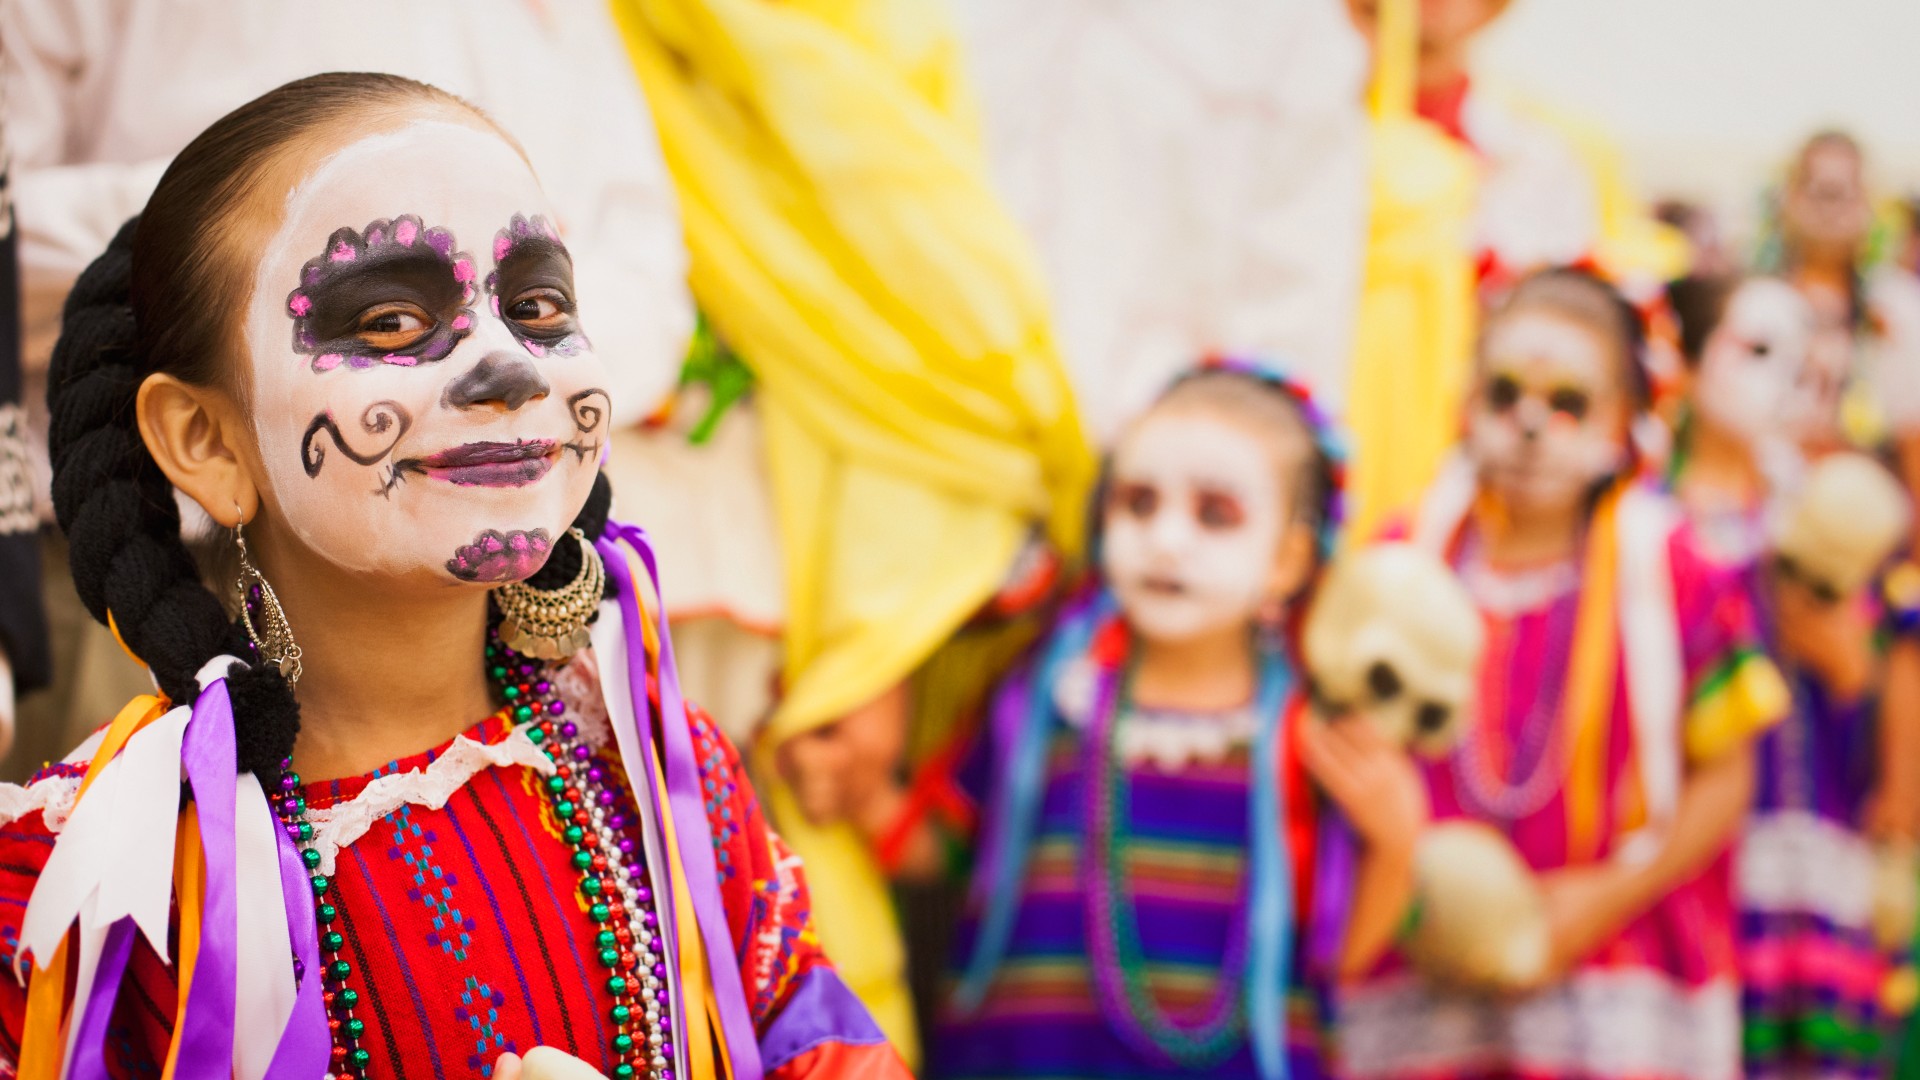 Children in traditional dress for Dia de los Muertos